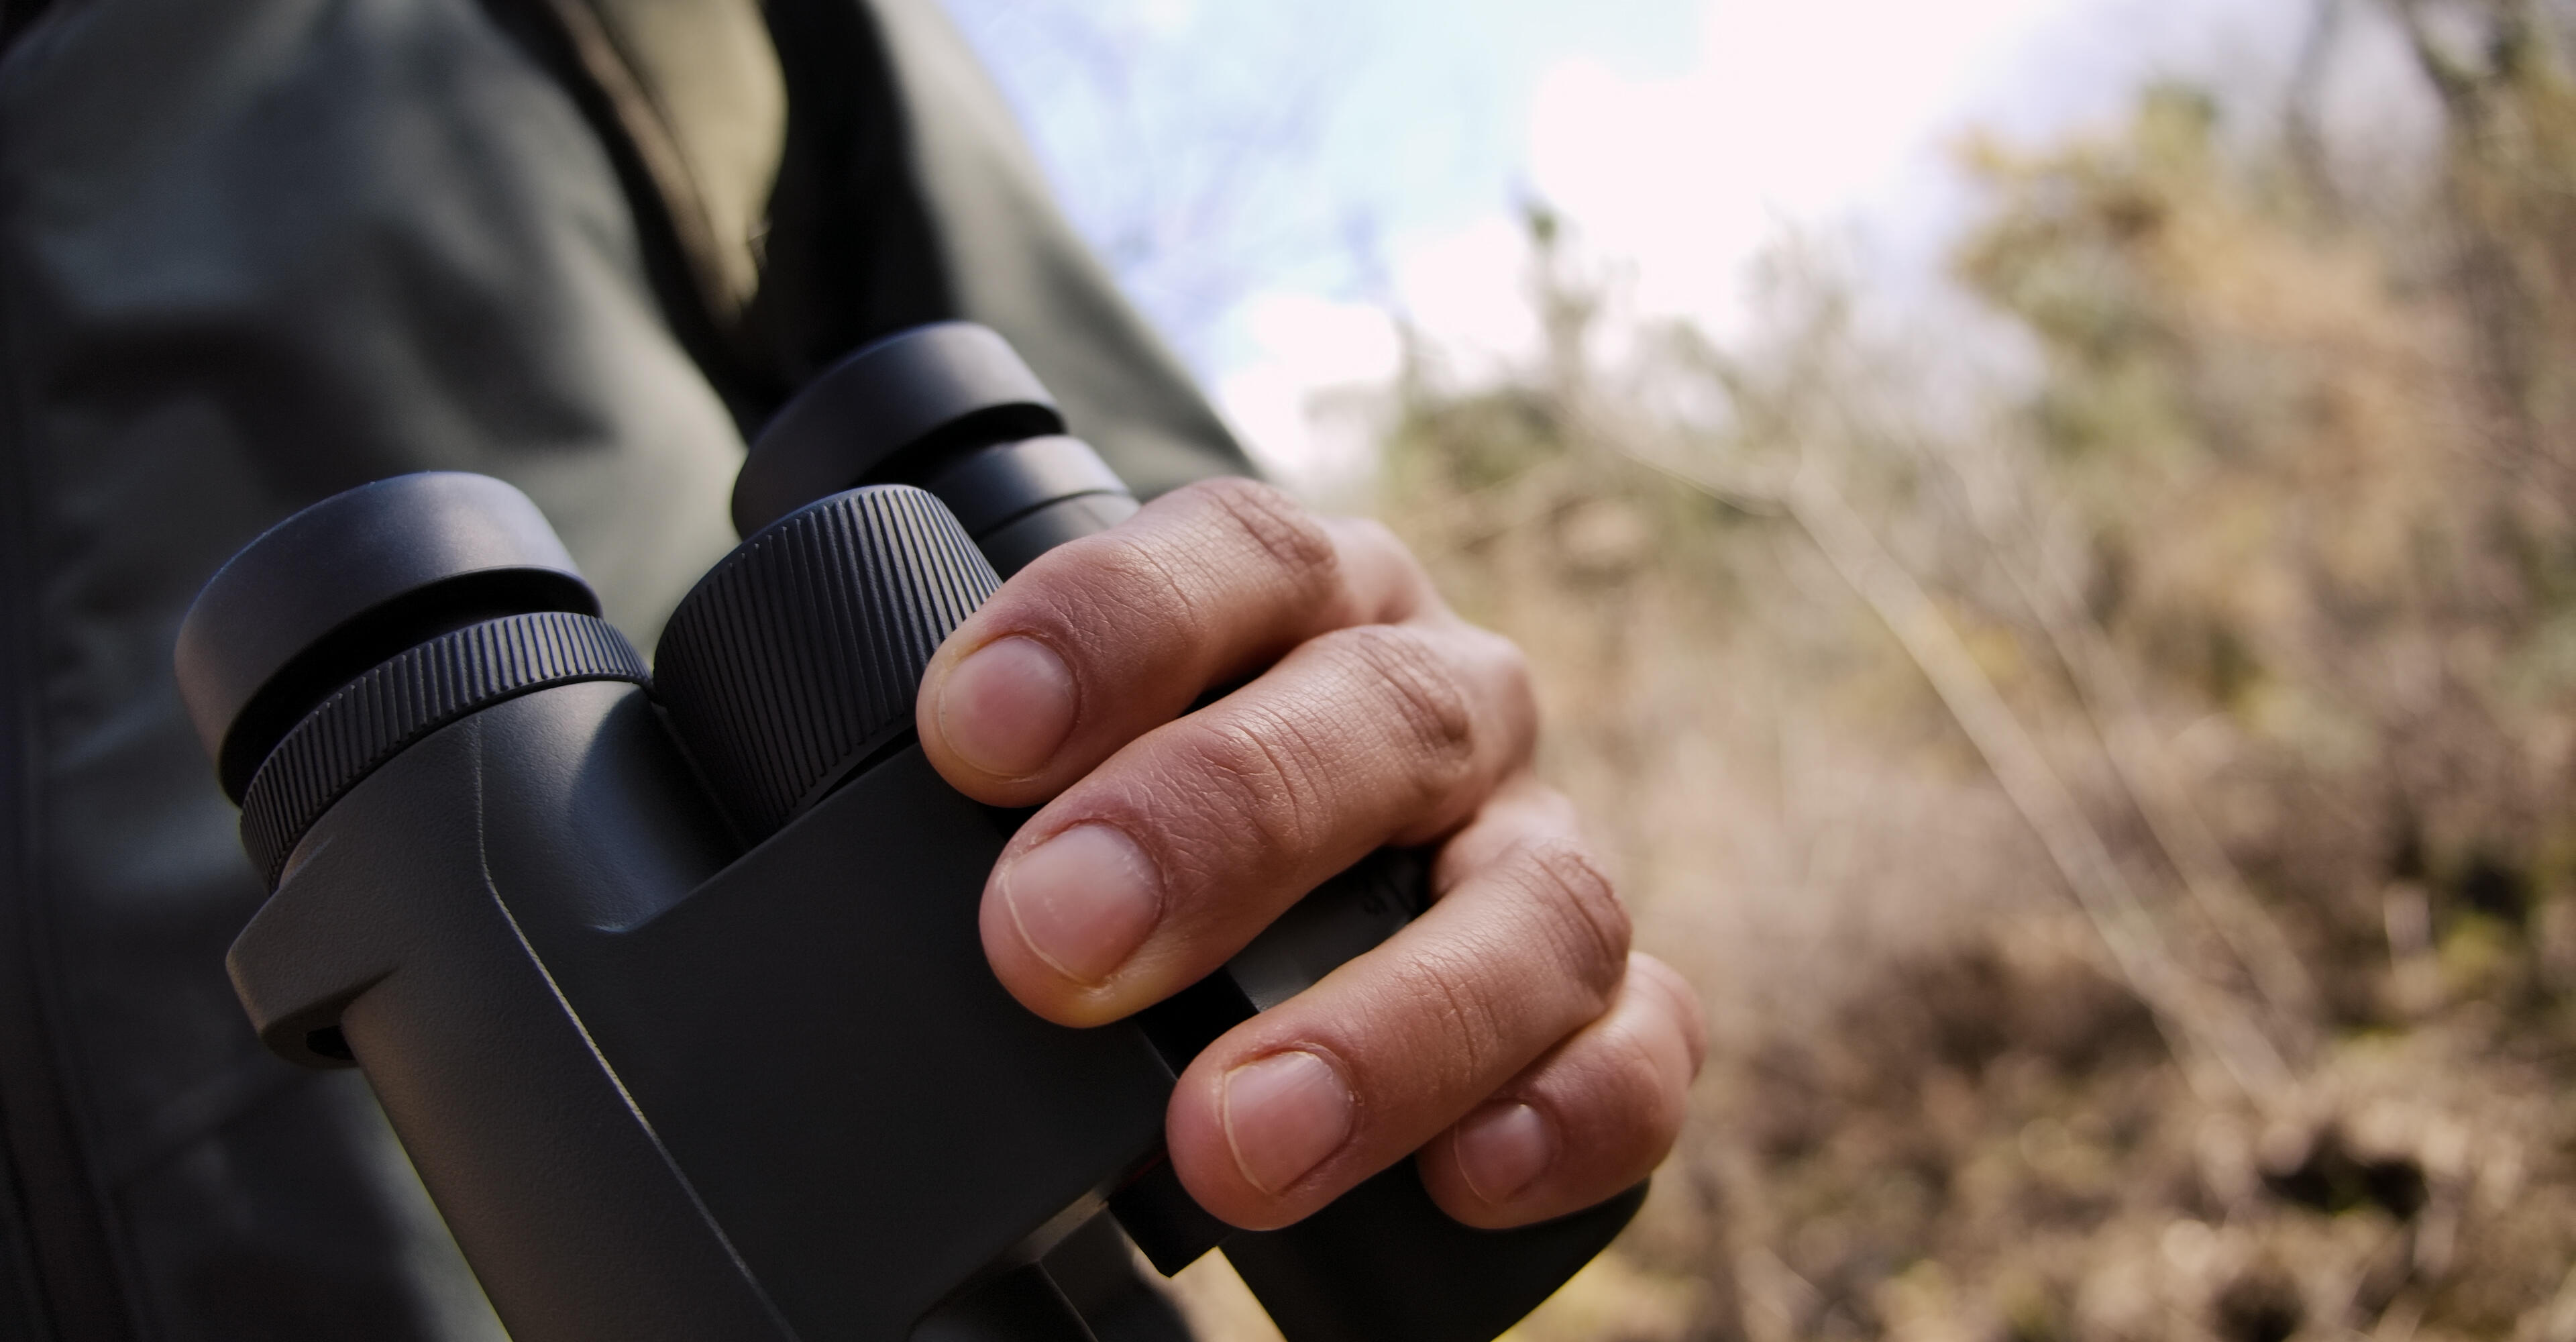 500 hunting binoculars - SOLOGNAC